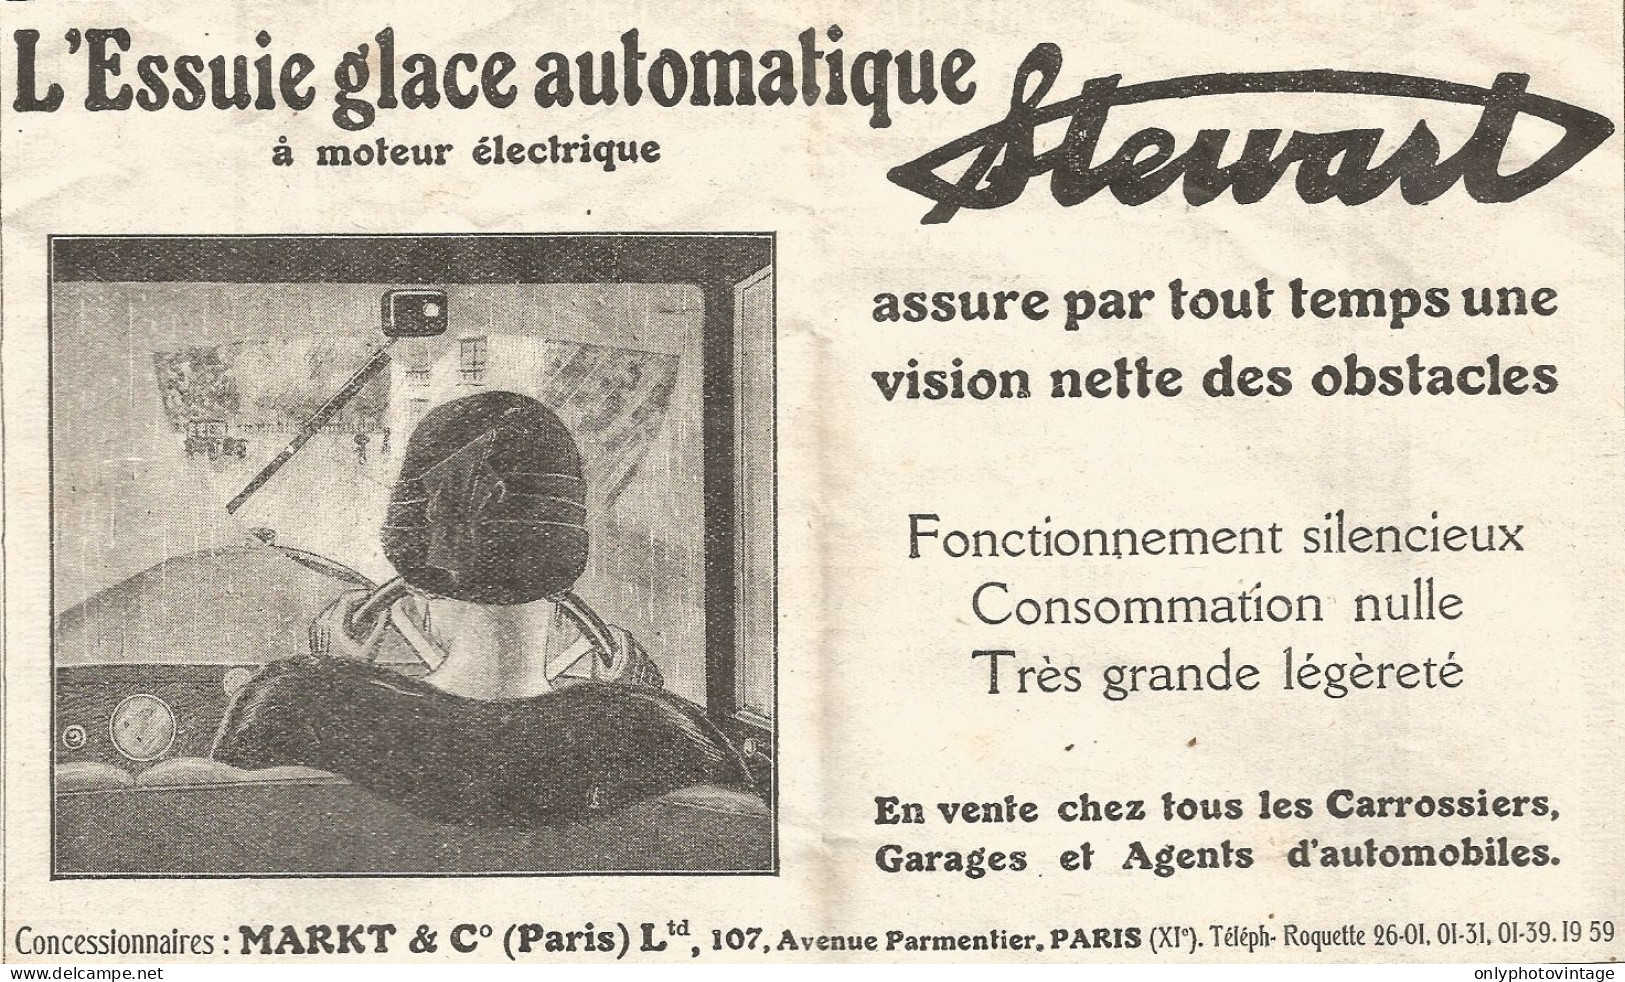 Tergicristalli Elettrici STEWART - Pubblicitï¿½ Del 1926 - Old Advertising - Advertising